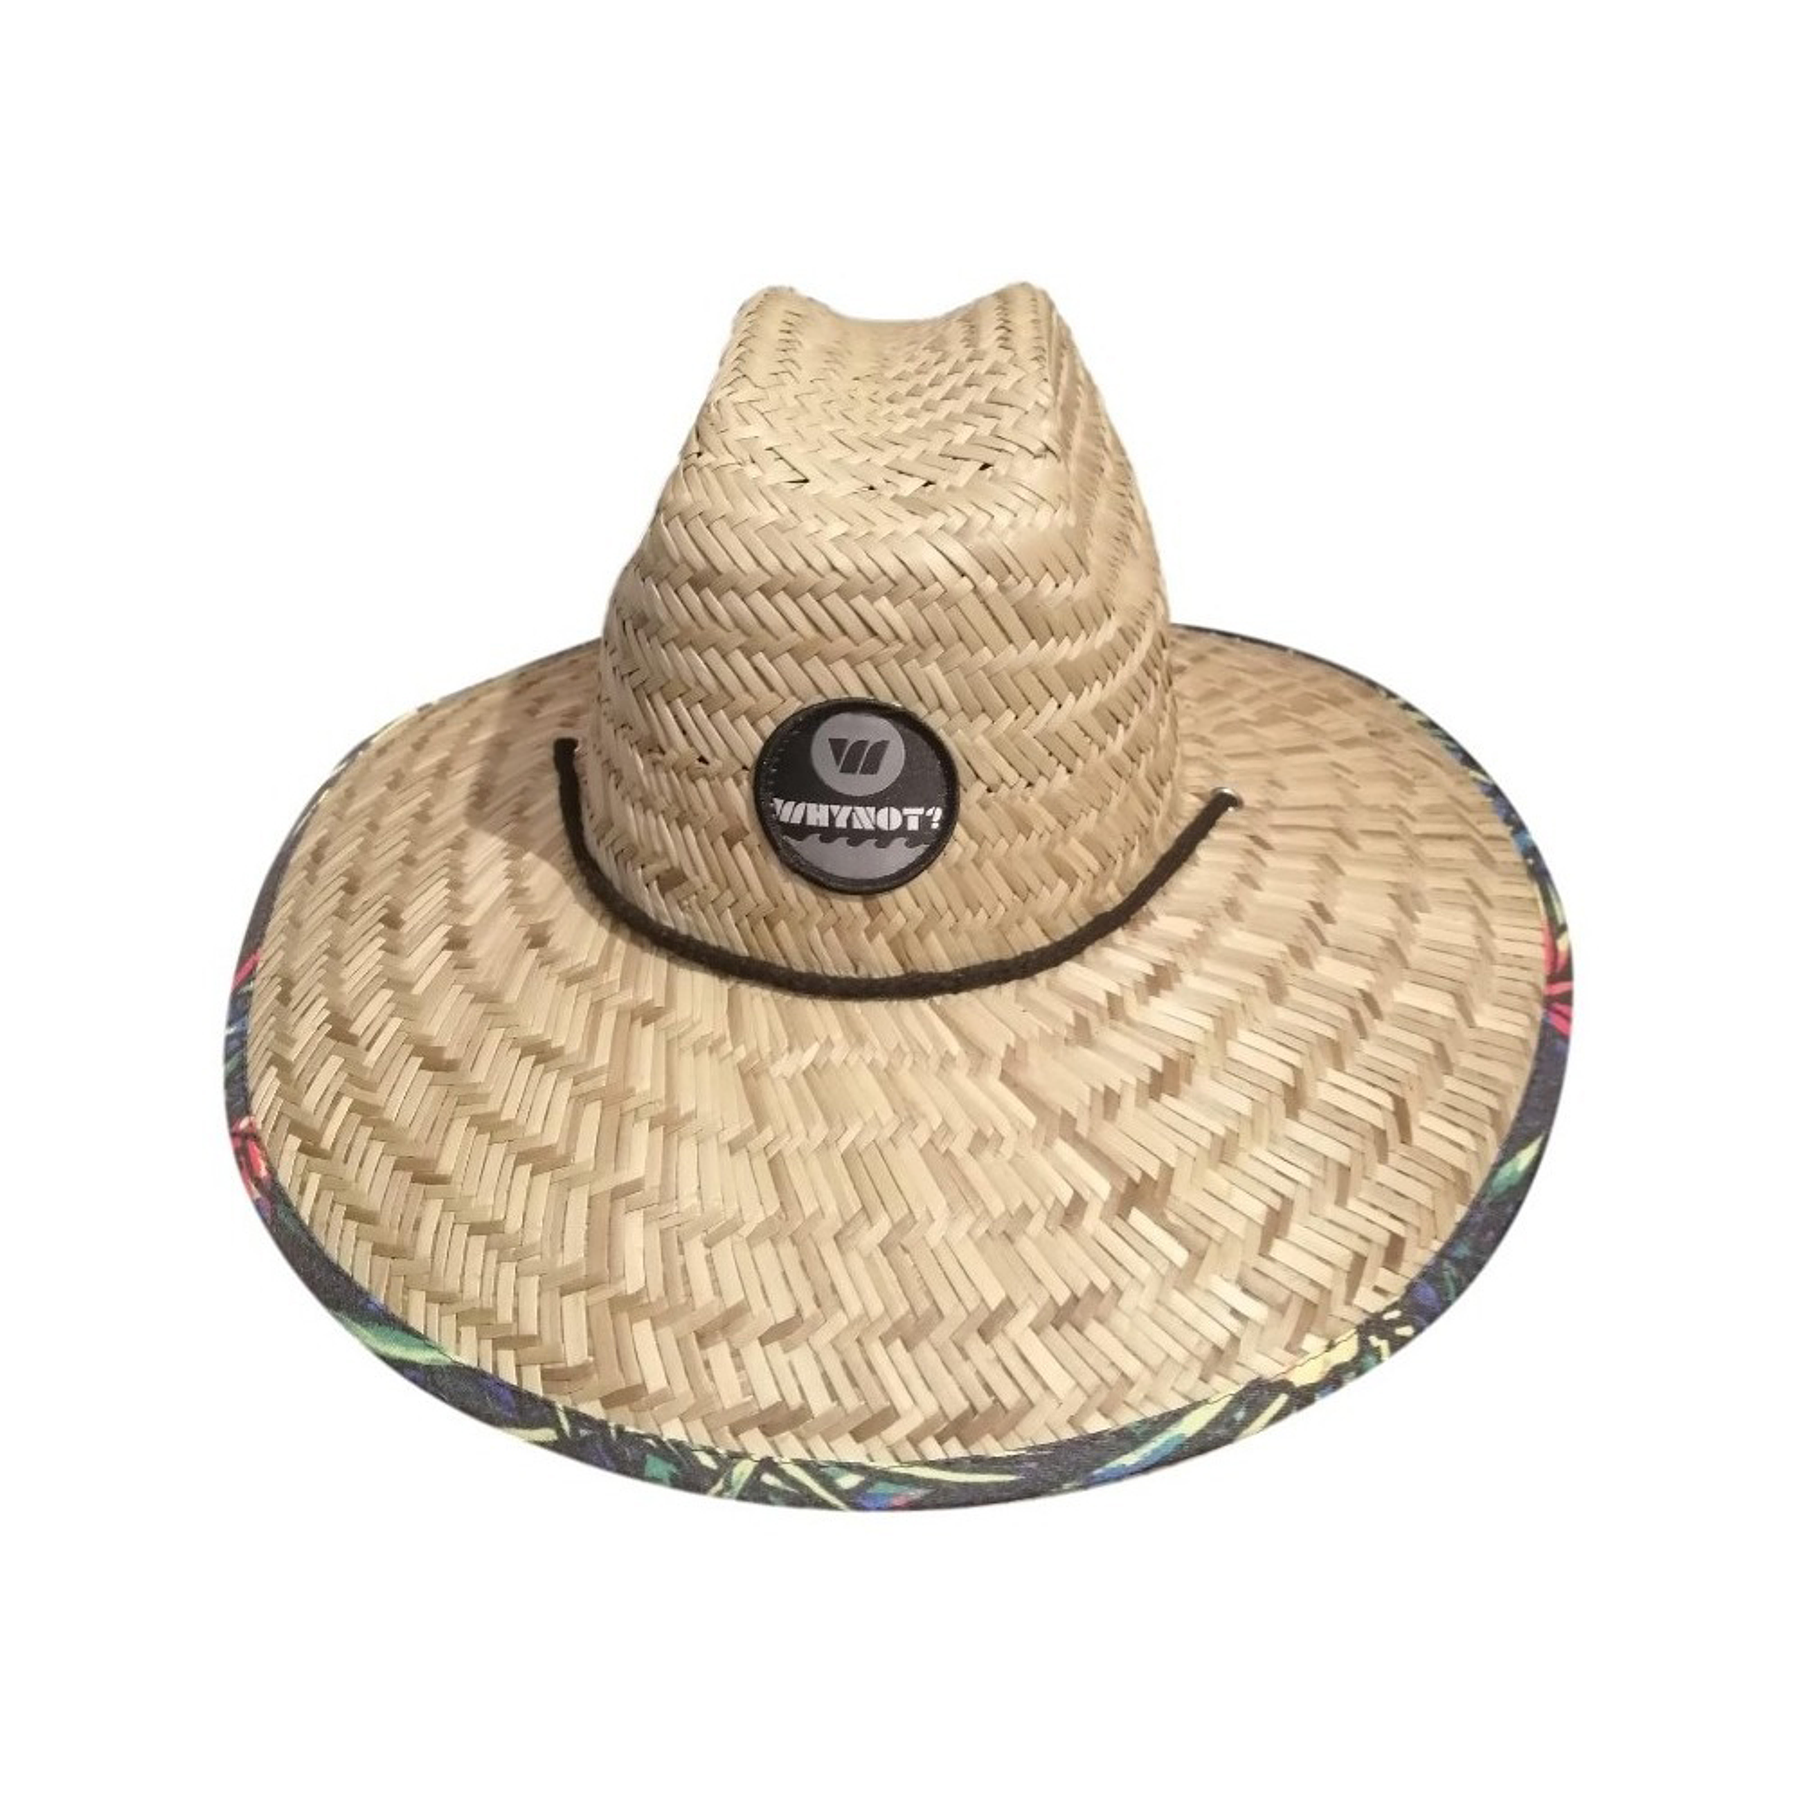 Sombrero de Paja Australiano Tropical Whynot